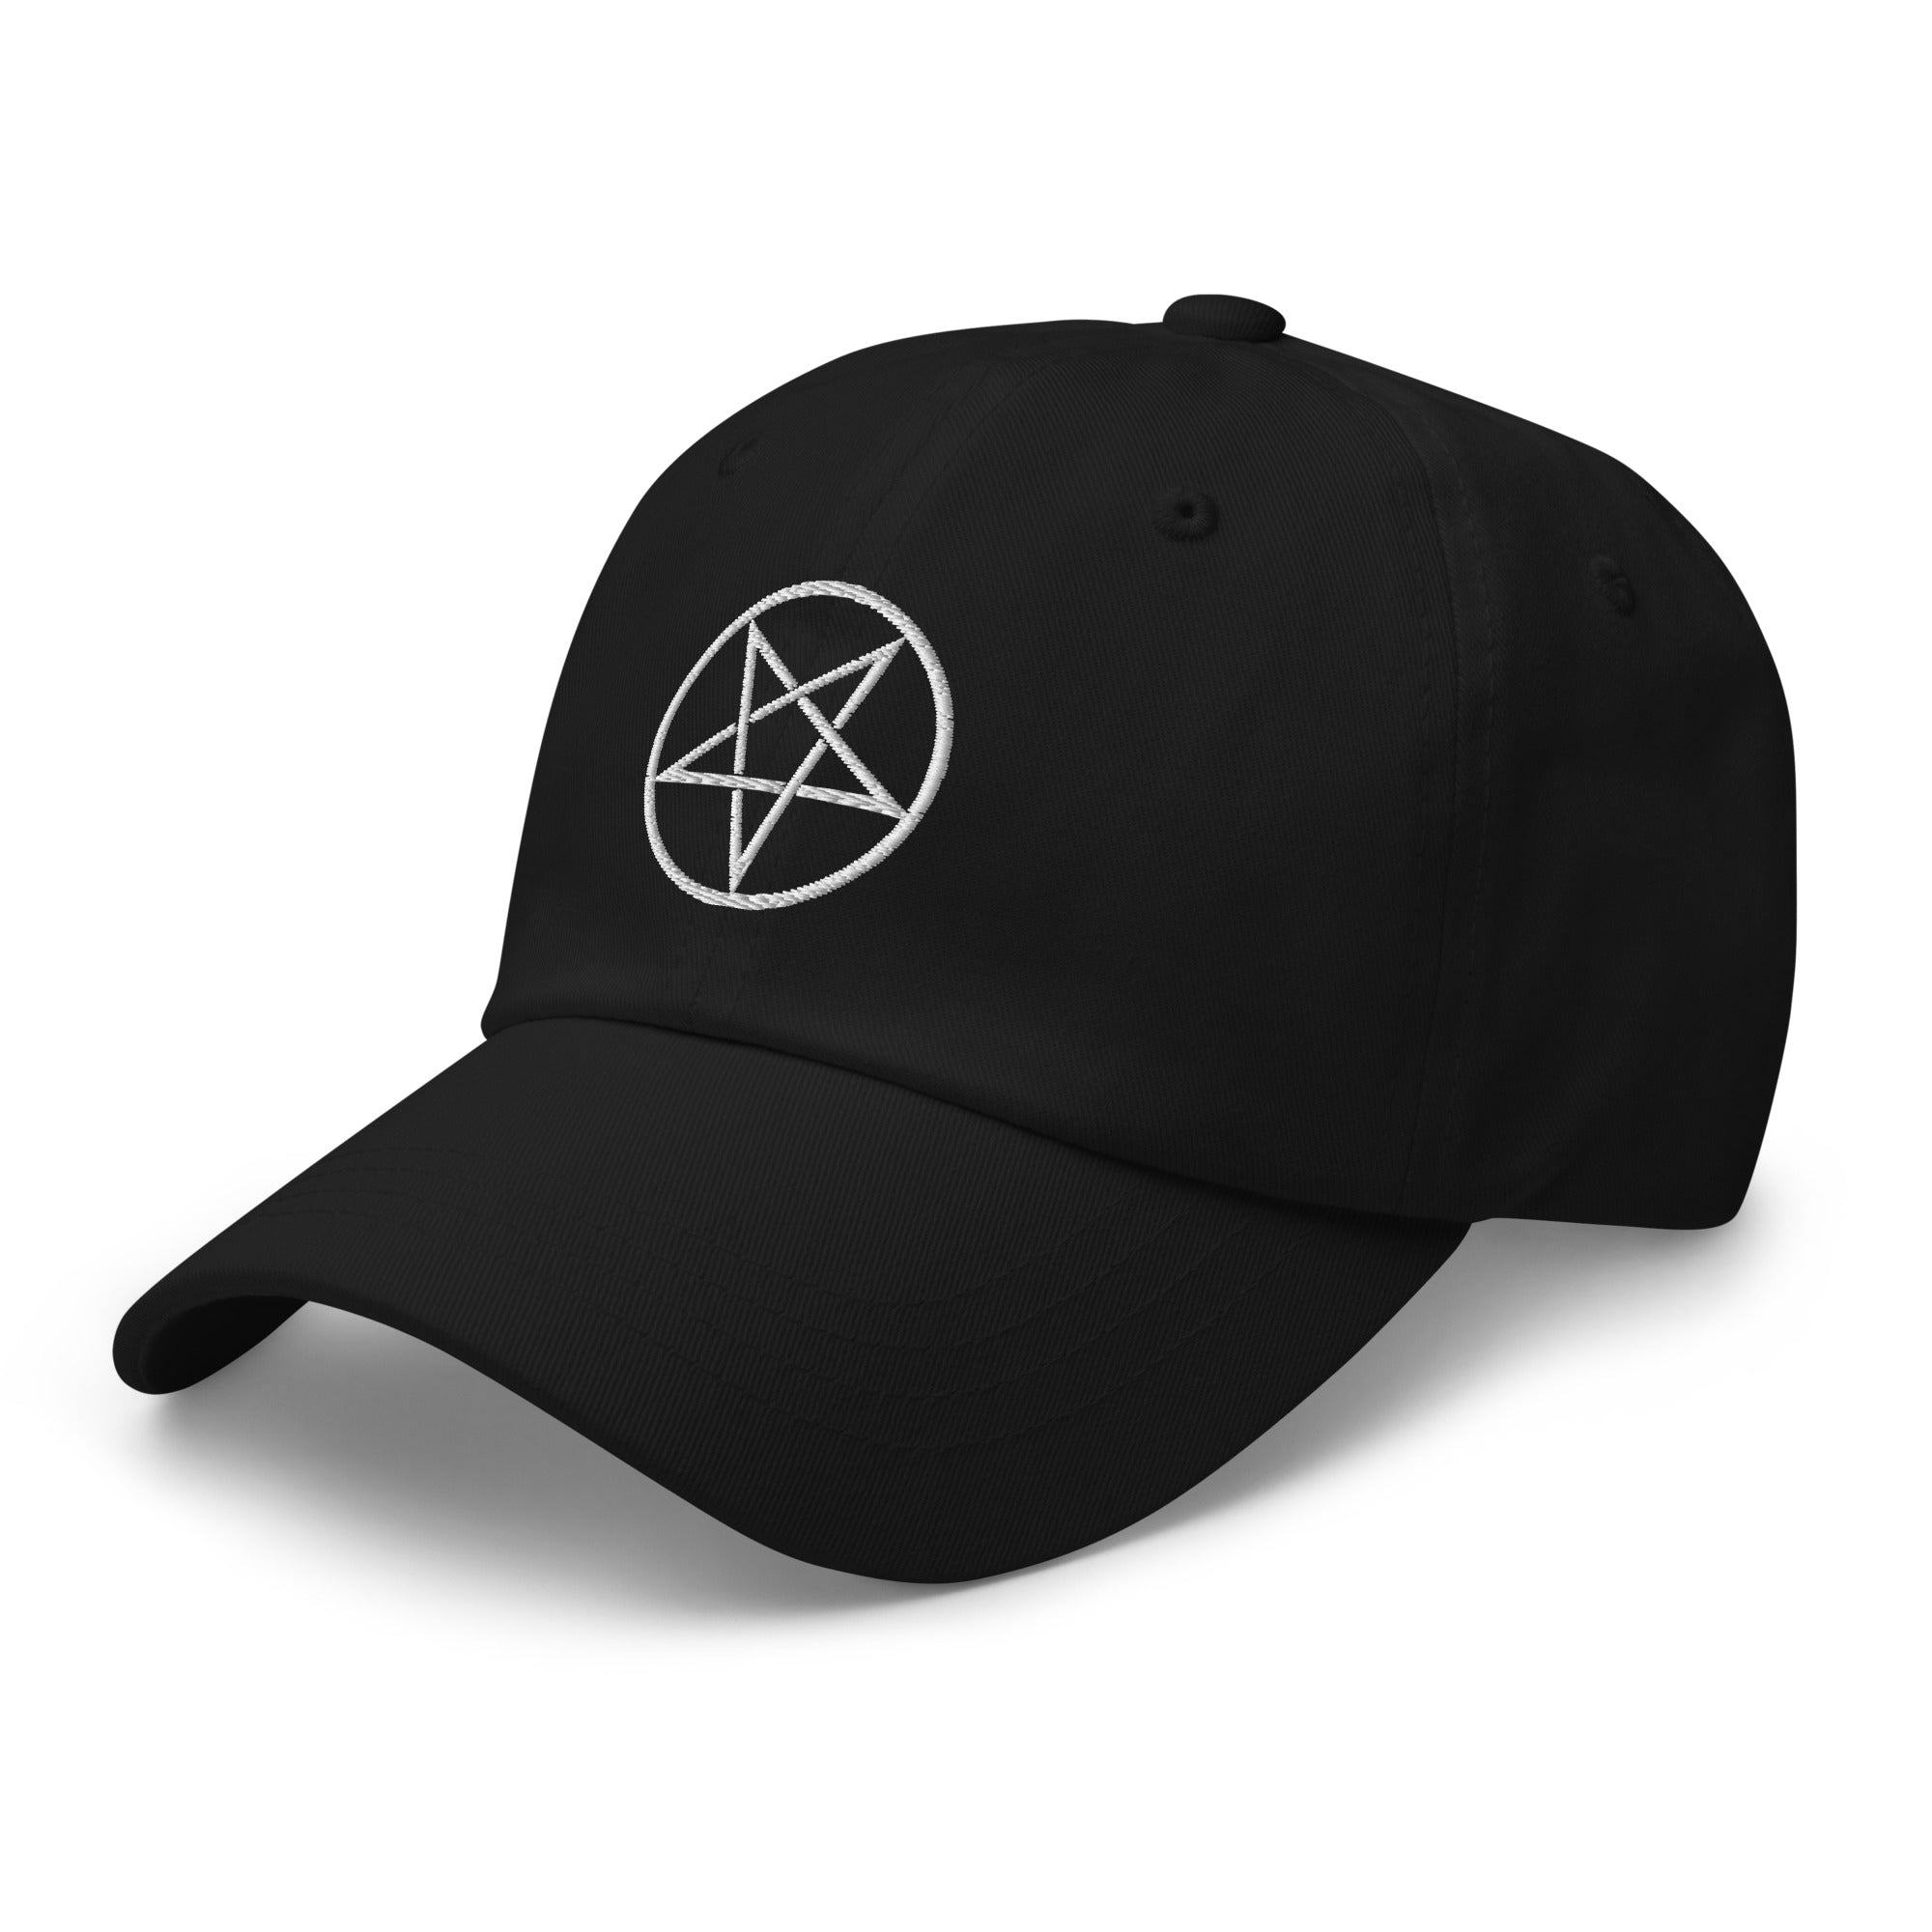 Woven Inverted Pentagram Symbol Embroidered Baseball Cap Satanic Temple Dad hat - Edge of Life Designs